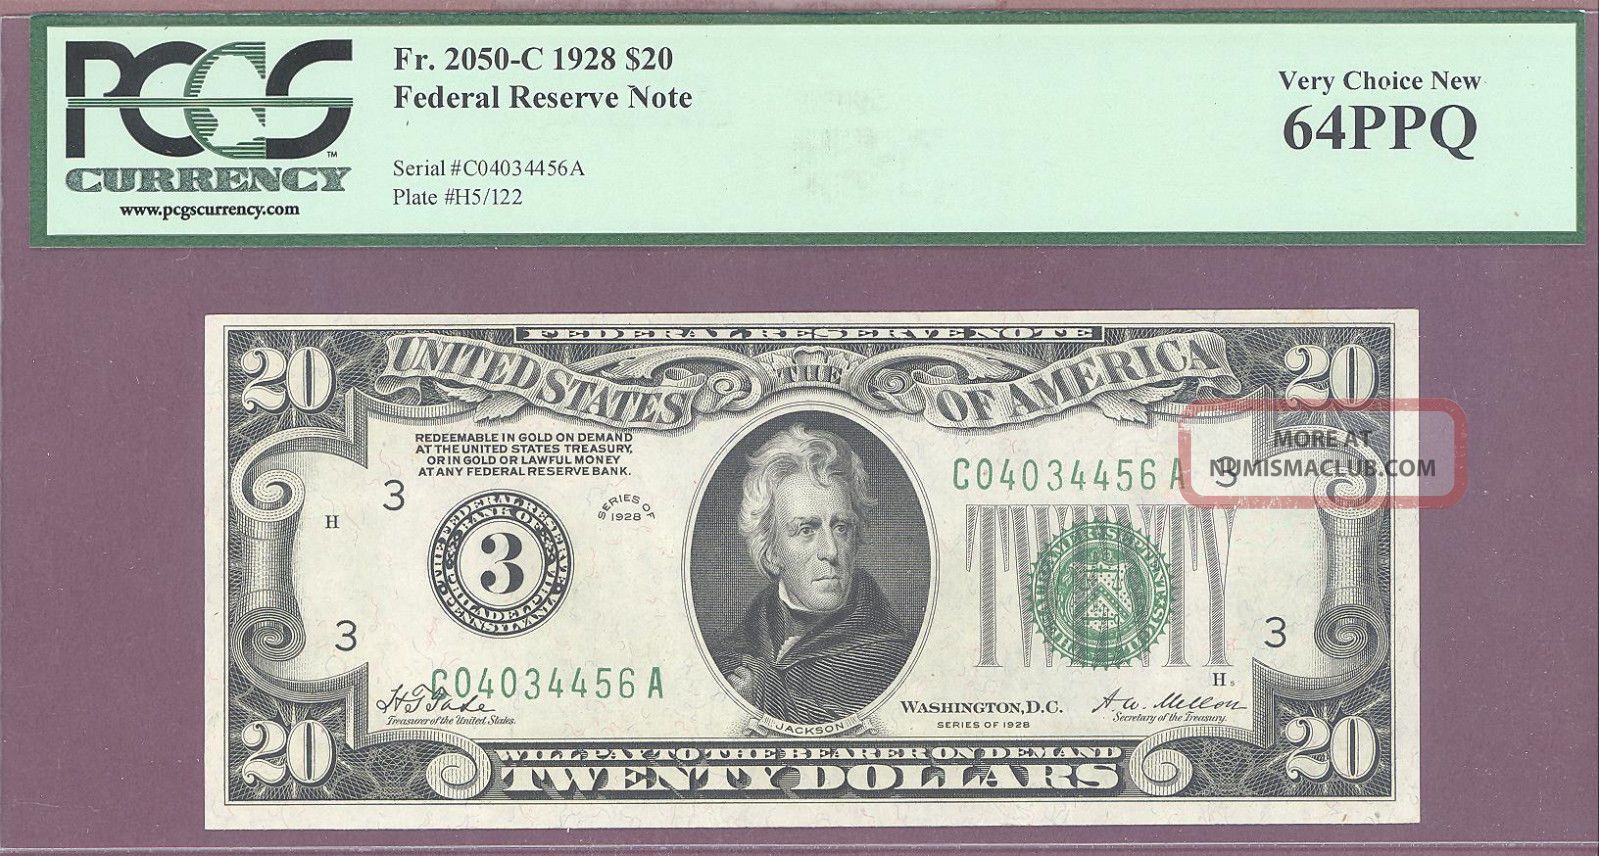 3 1928 $20 Frn Philadelphia Pa Pcgs 64 Ppq Vc F 2050 - C Tate - Mellon Small Size Notes photo